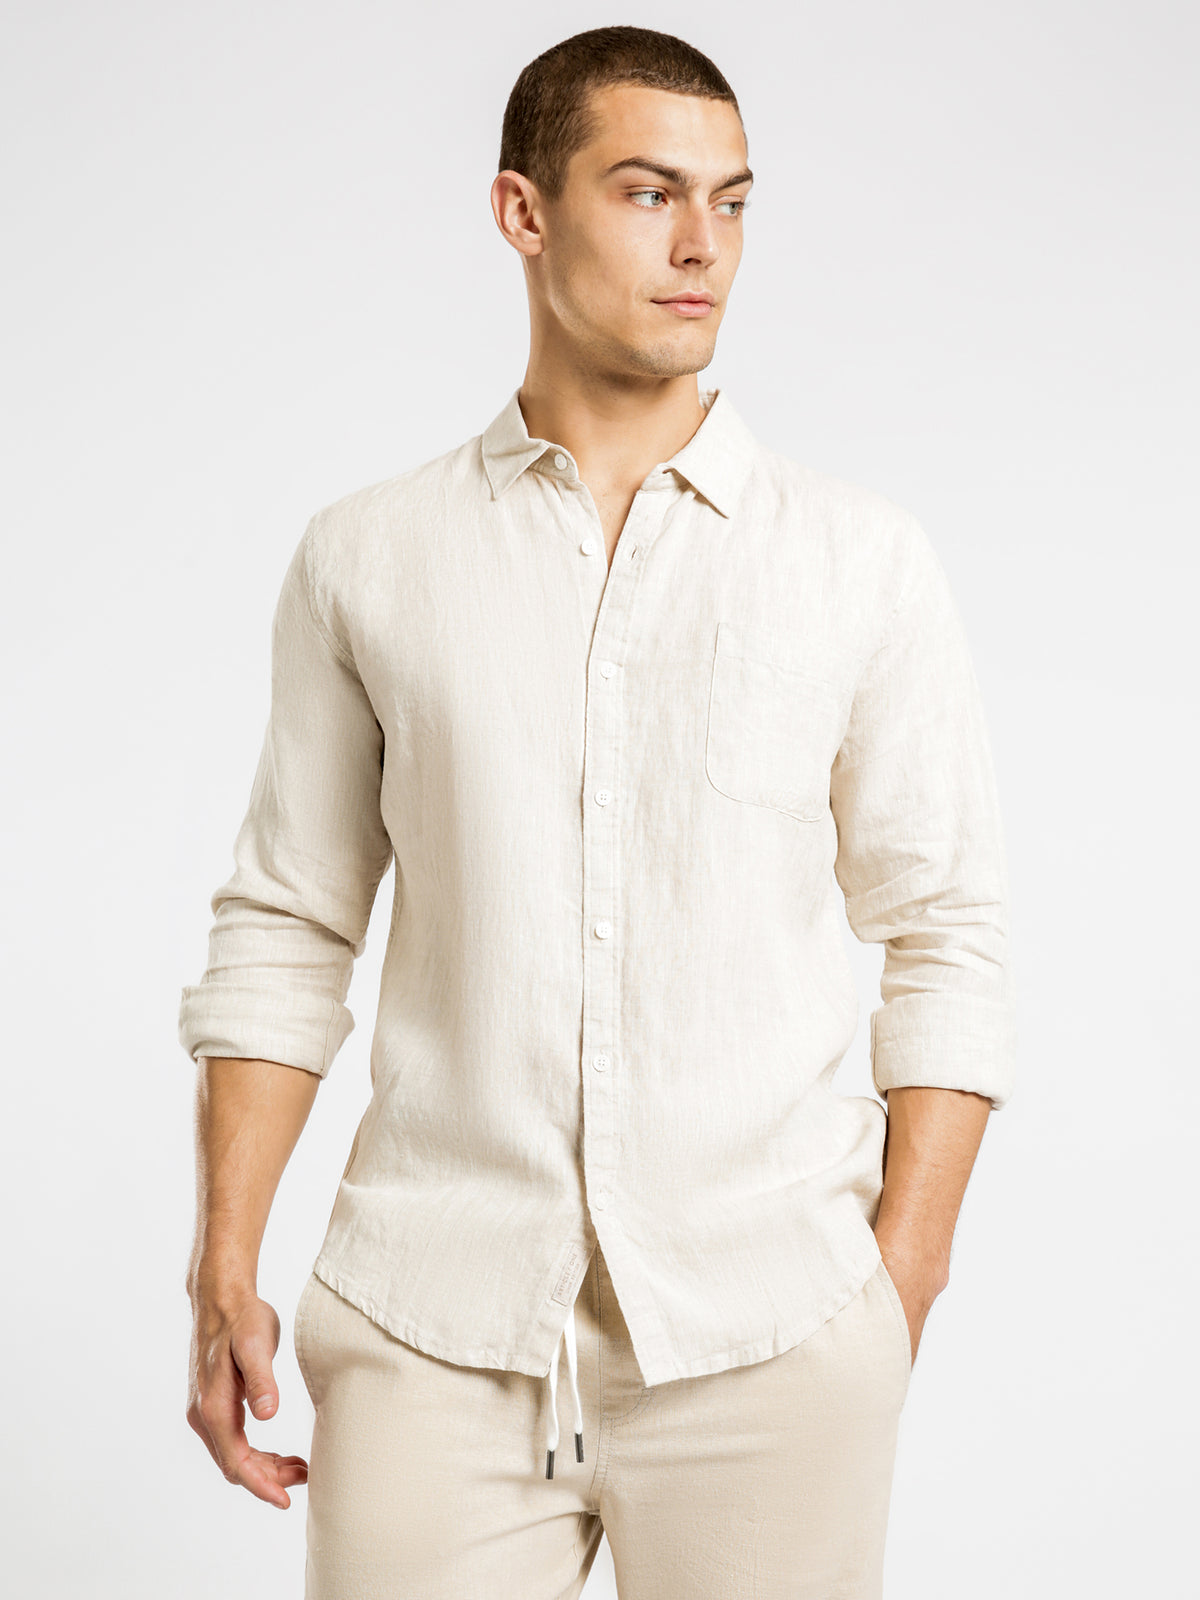 Nelson Long Sleeve Linen Shirt in Natural Marle